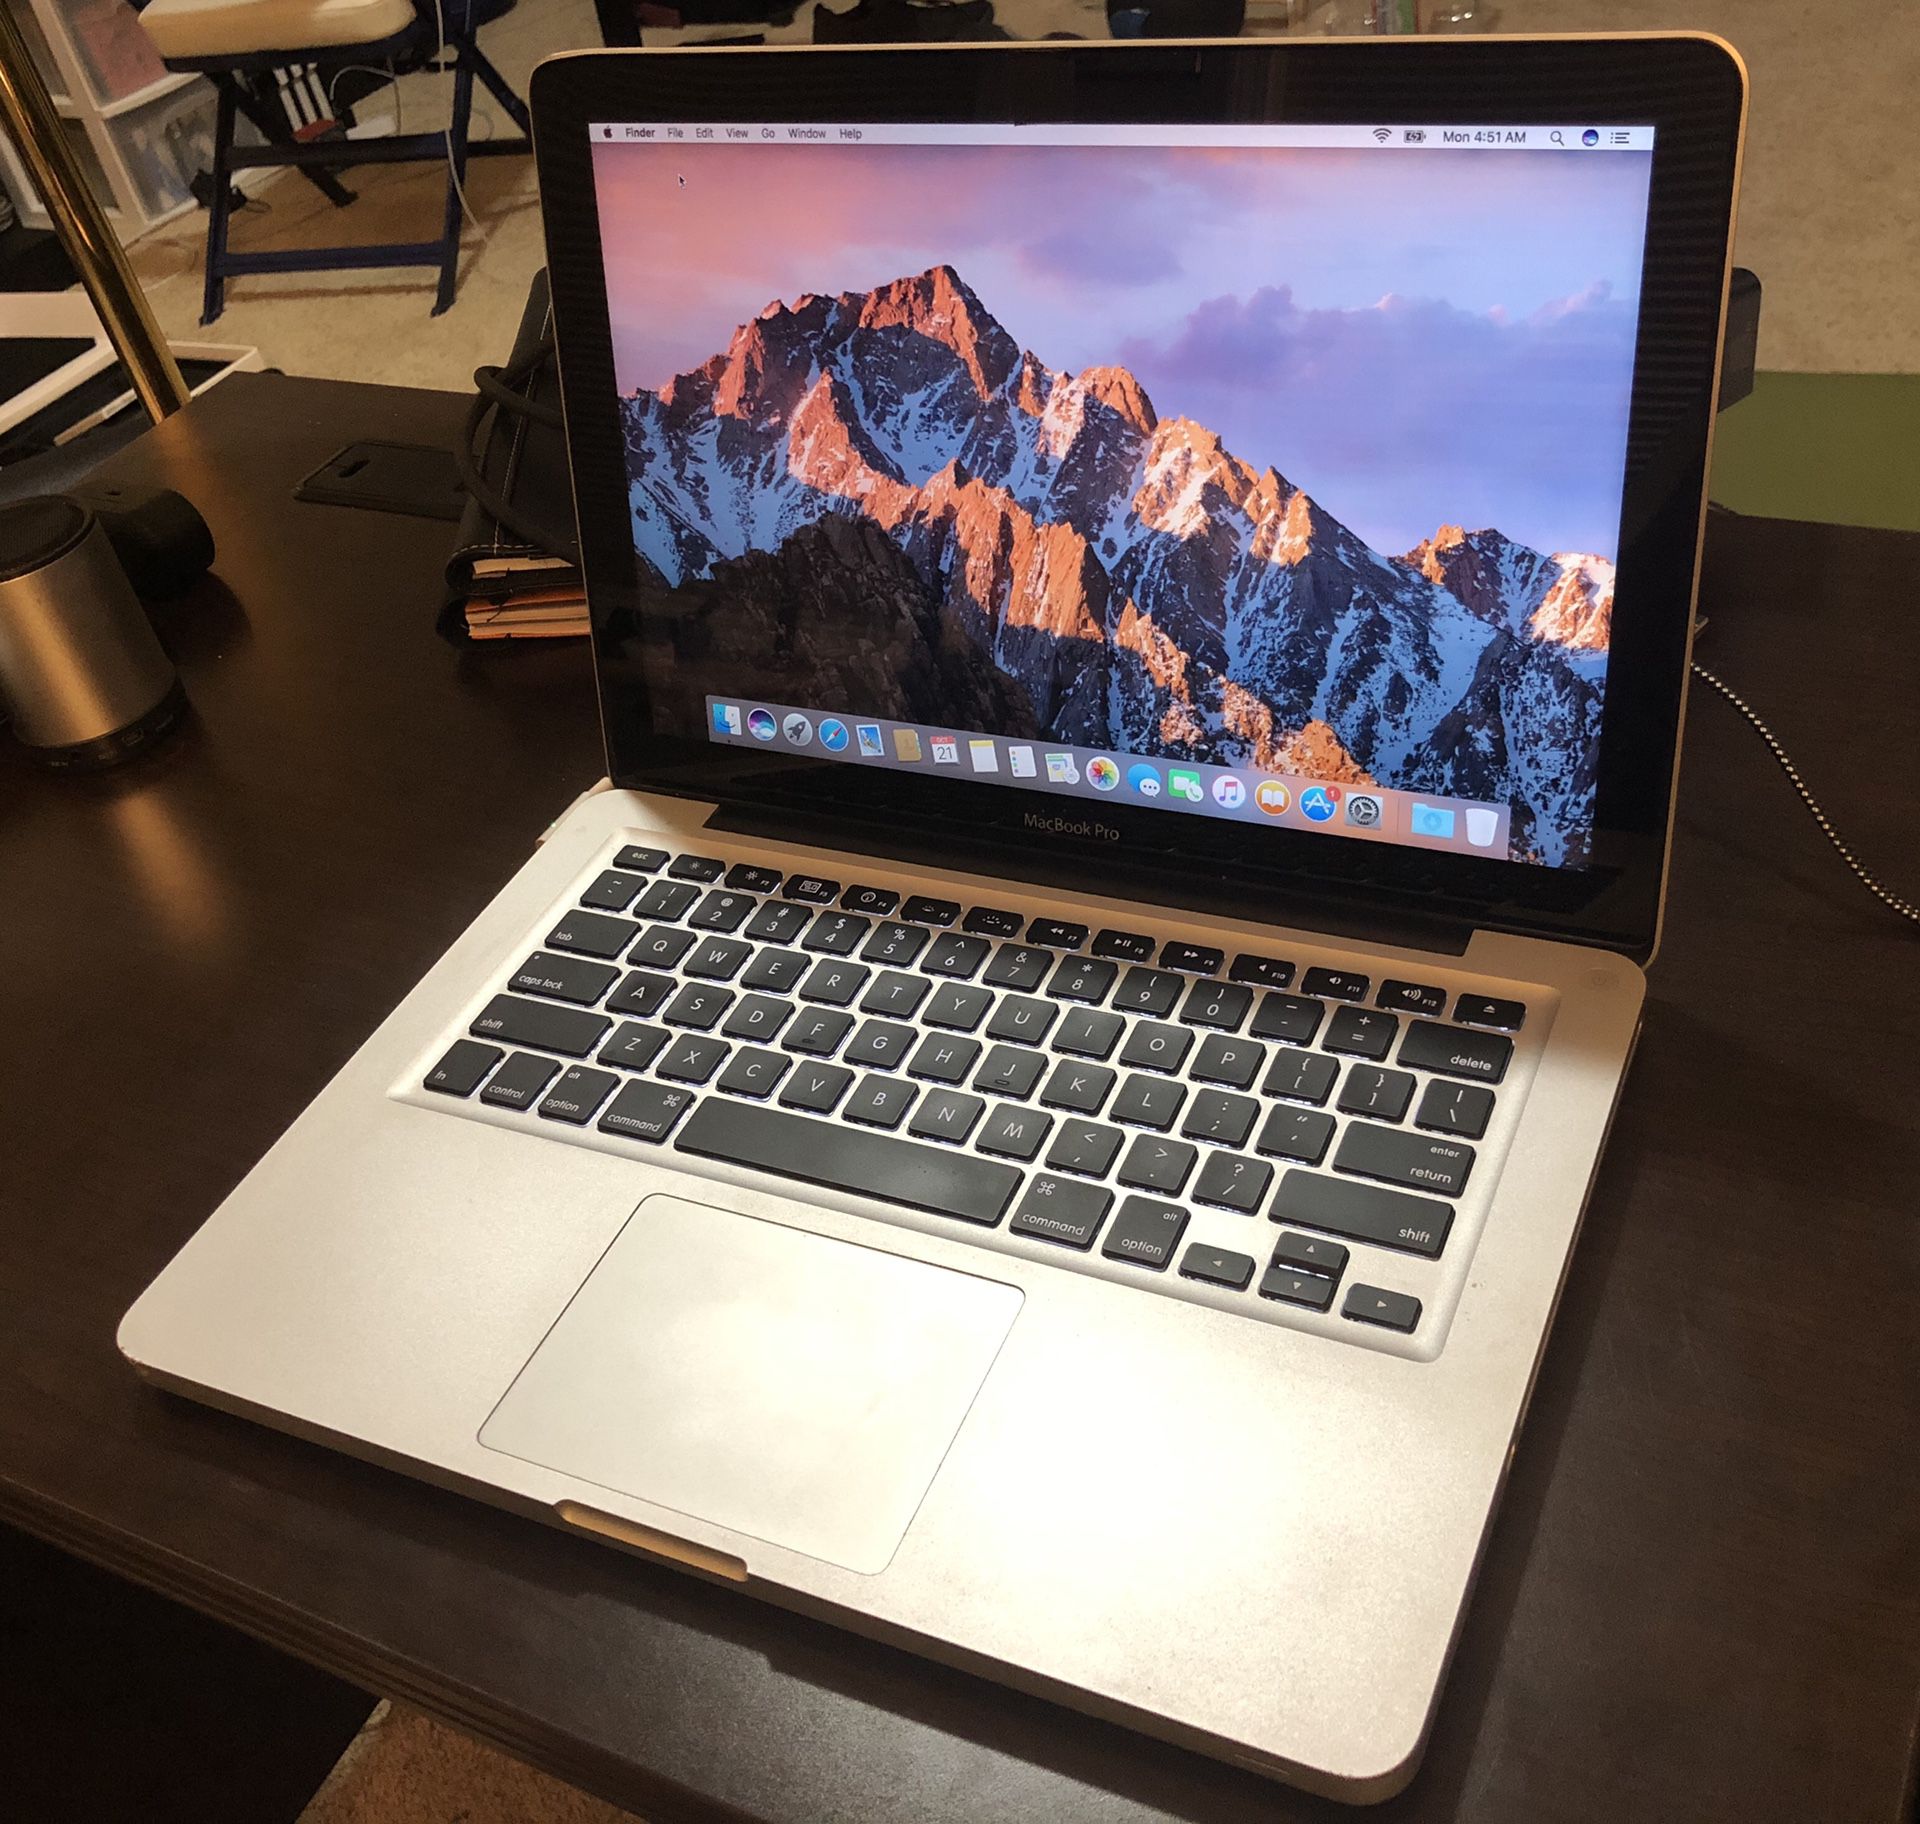 MacBook Pro 13 inch 320gb (mid 2010)